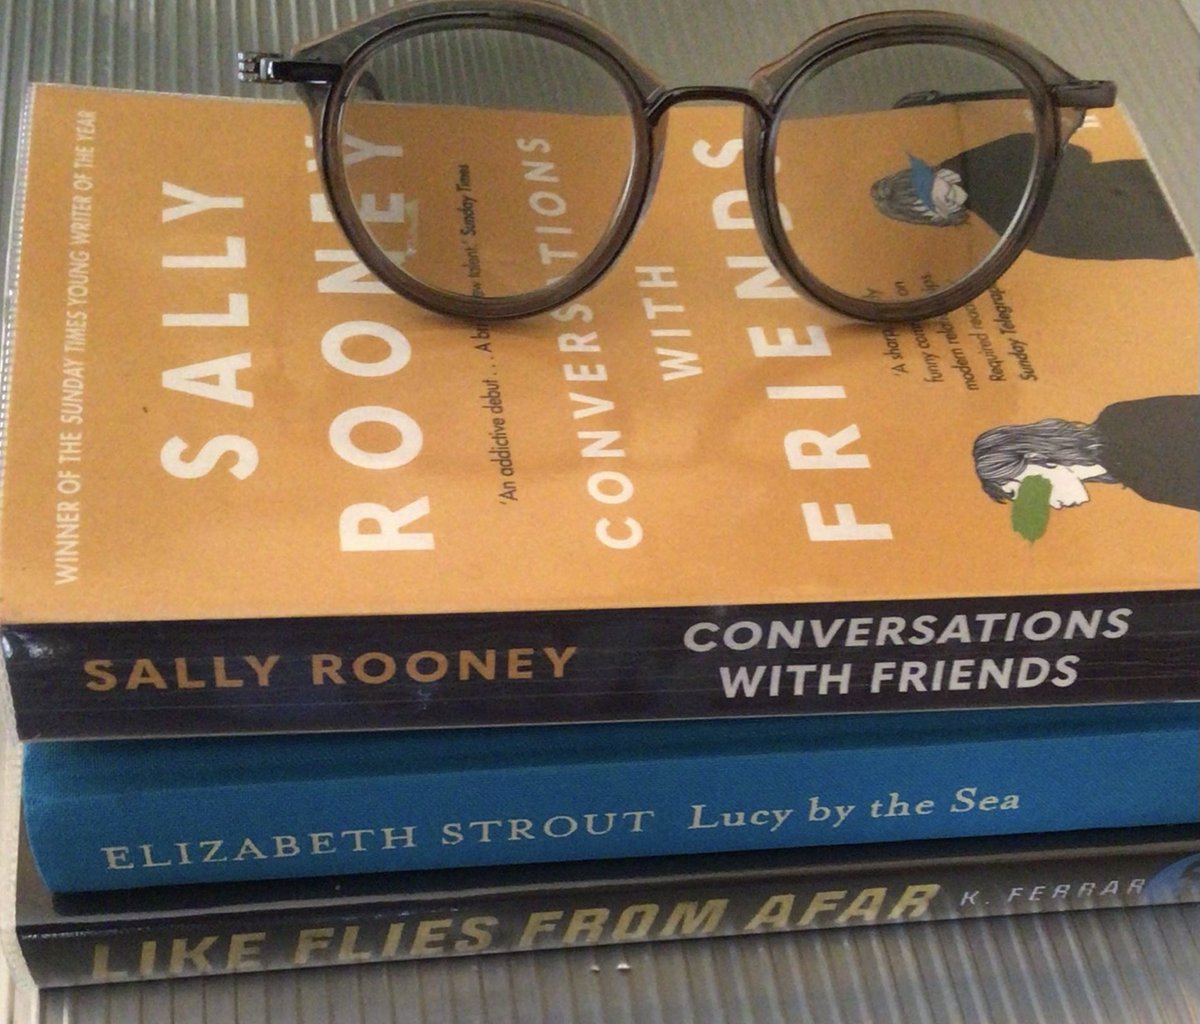 Blogging on a rainy day…..

bookphace.blogspot.com/2022/11/lucy-b…

bookphace.blogspot.com/2022/11/like-f…

bookphace.blogspot.com/2022/11/conver…

#ElizabethStrout #LucybytheSea #KFerrari #LikeFliesfromAfar #SallyRooney #ConversationswithFriends #bookblogger